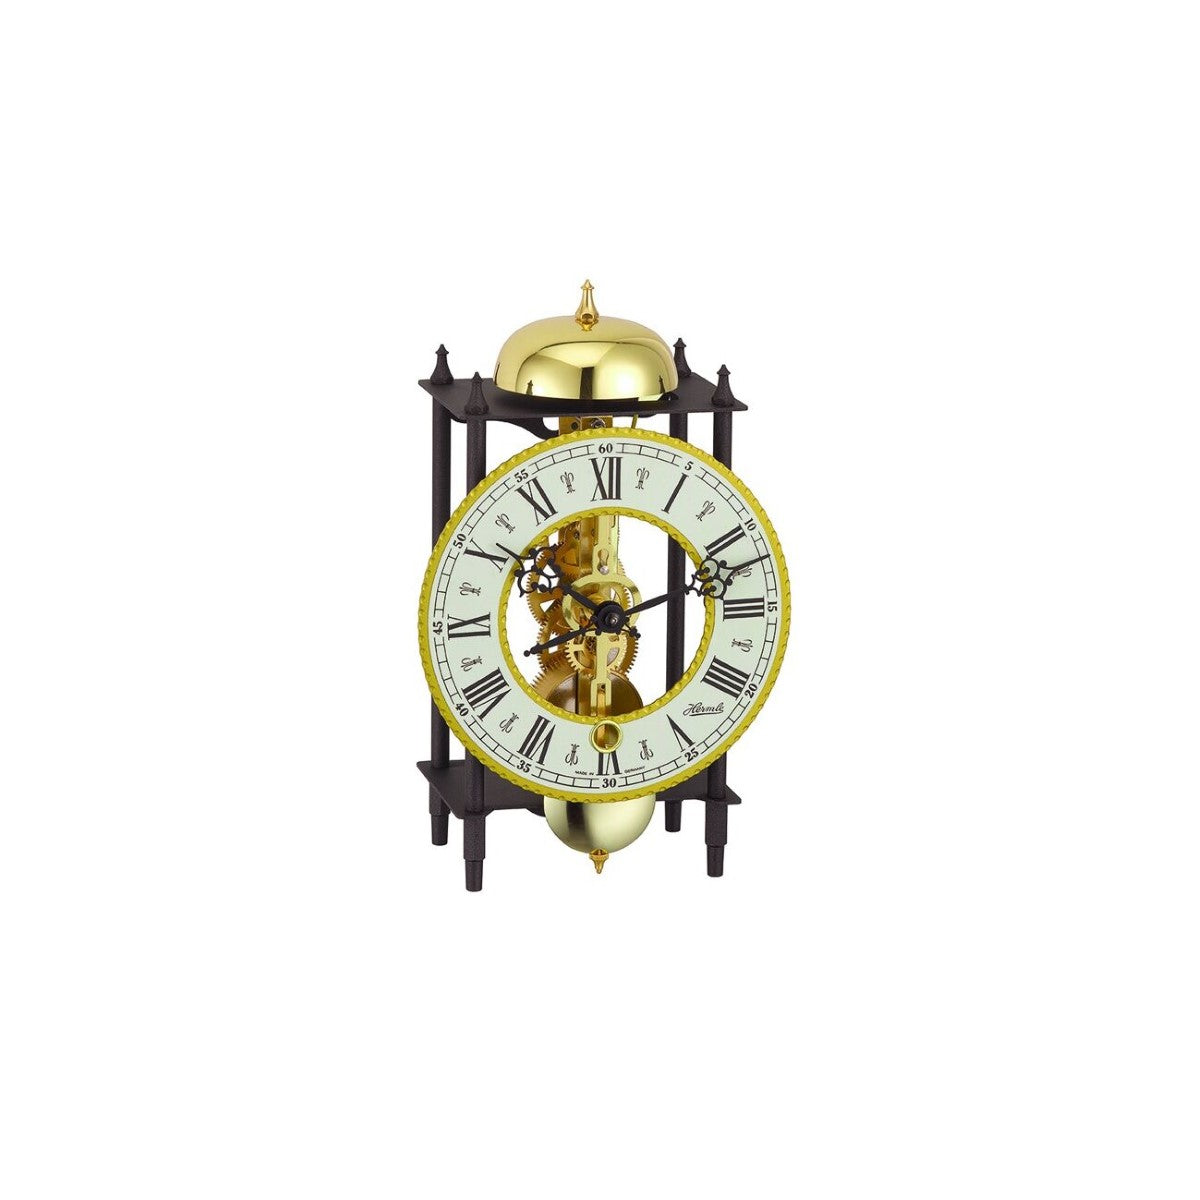 Hermle Kehl Black & Gold Skeleton Tabletop Mantel Clock, 23003000711